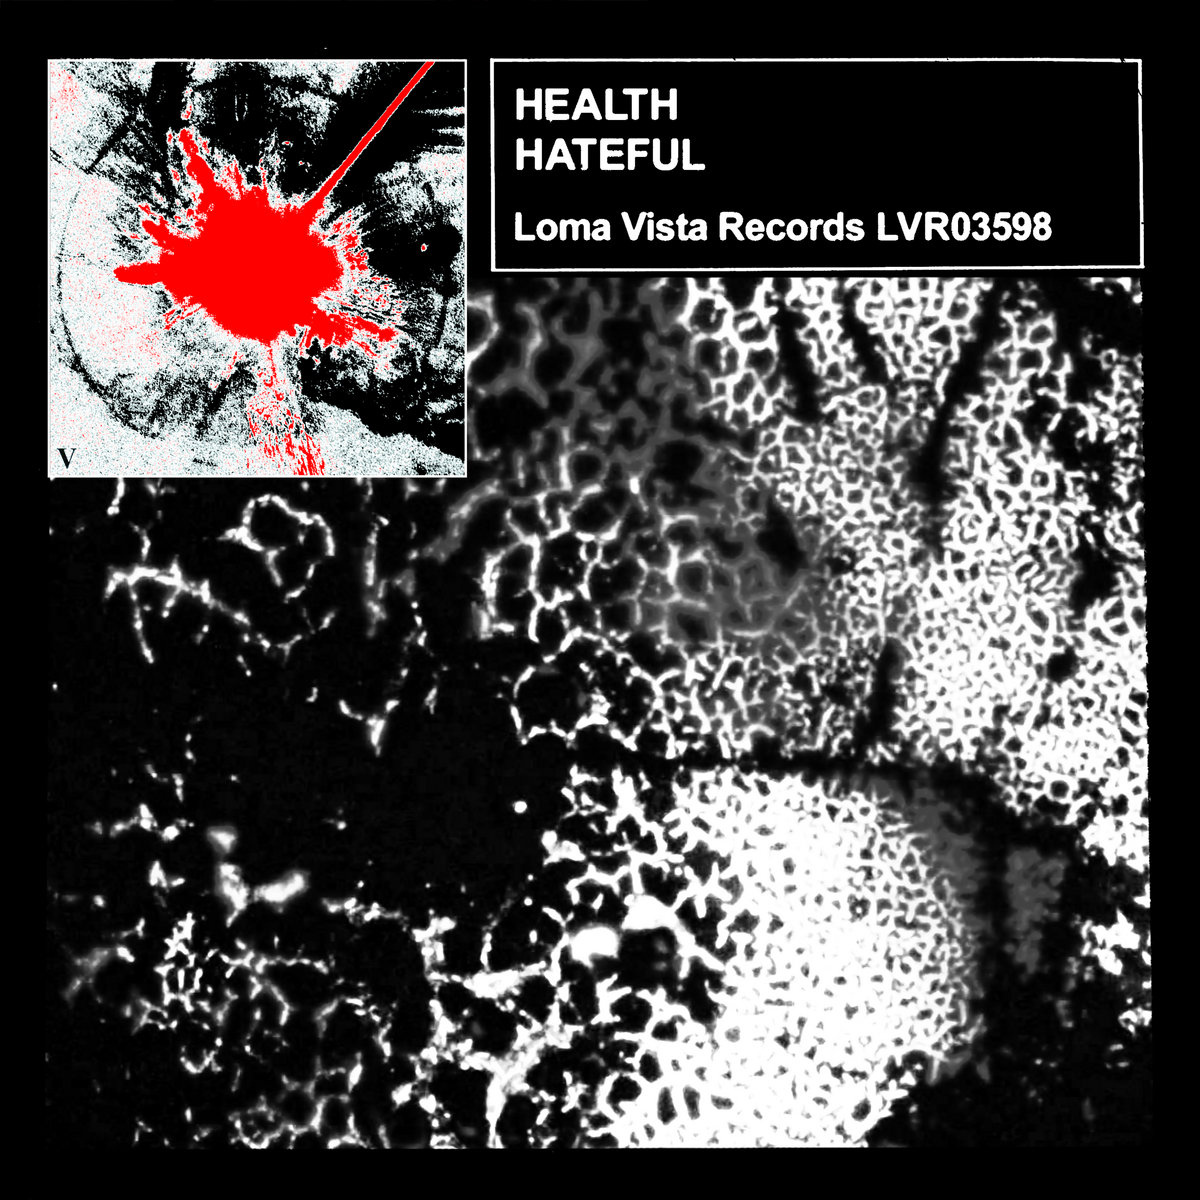 HEALTH featuring SIERRA — Hateful cover artwork